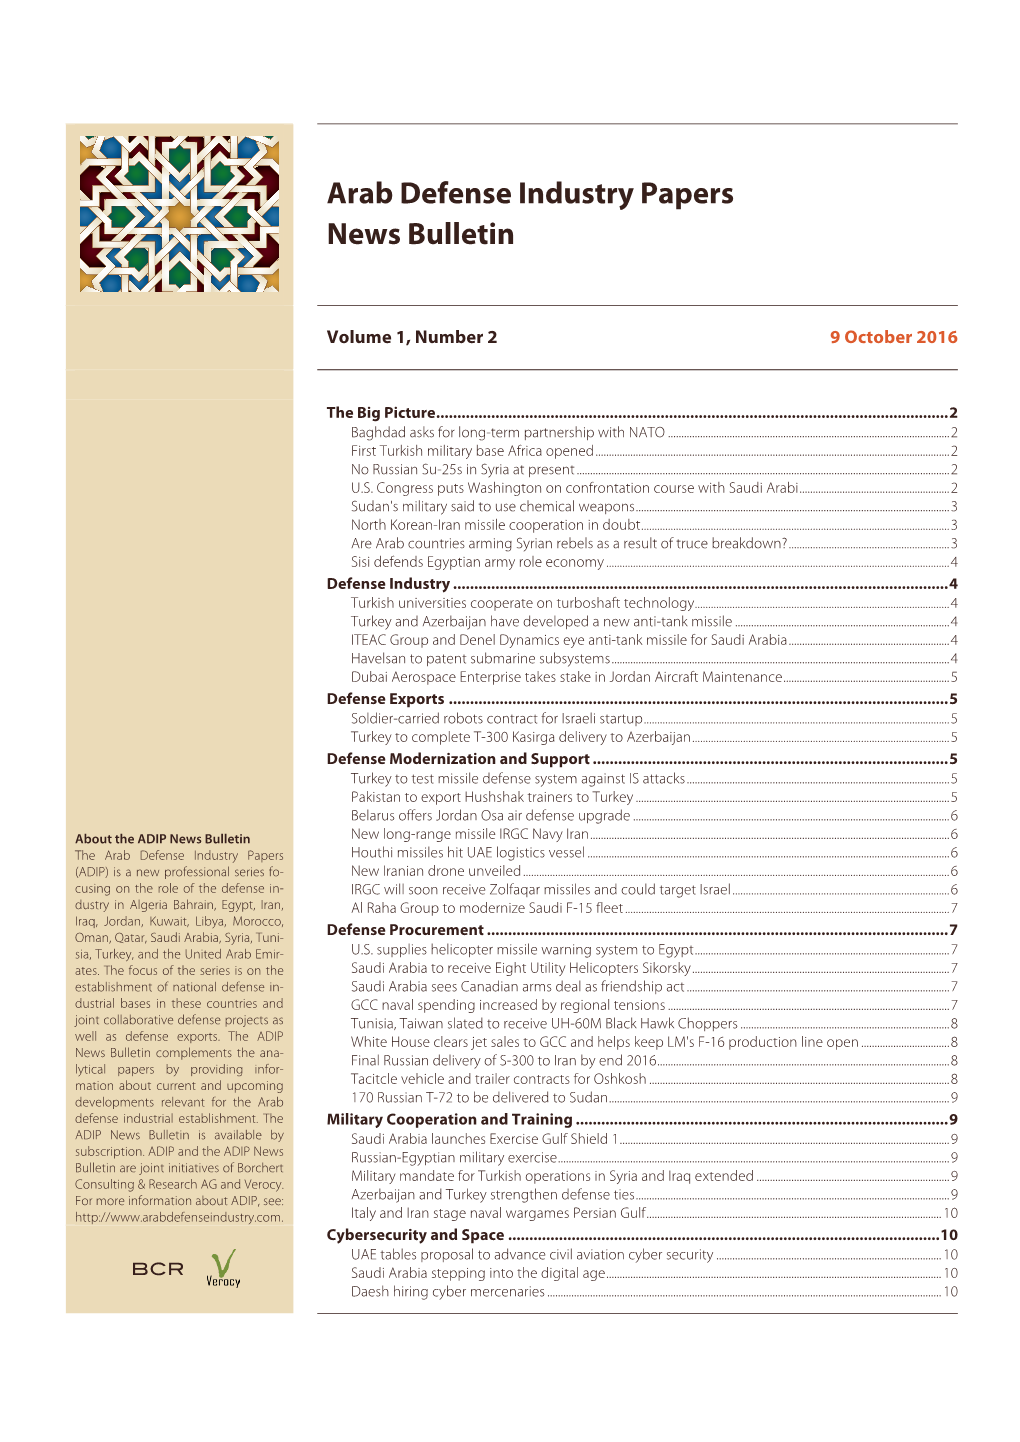 Arab Defense Industry Papers News Bulletin